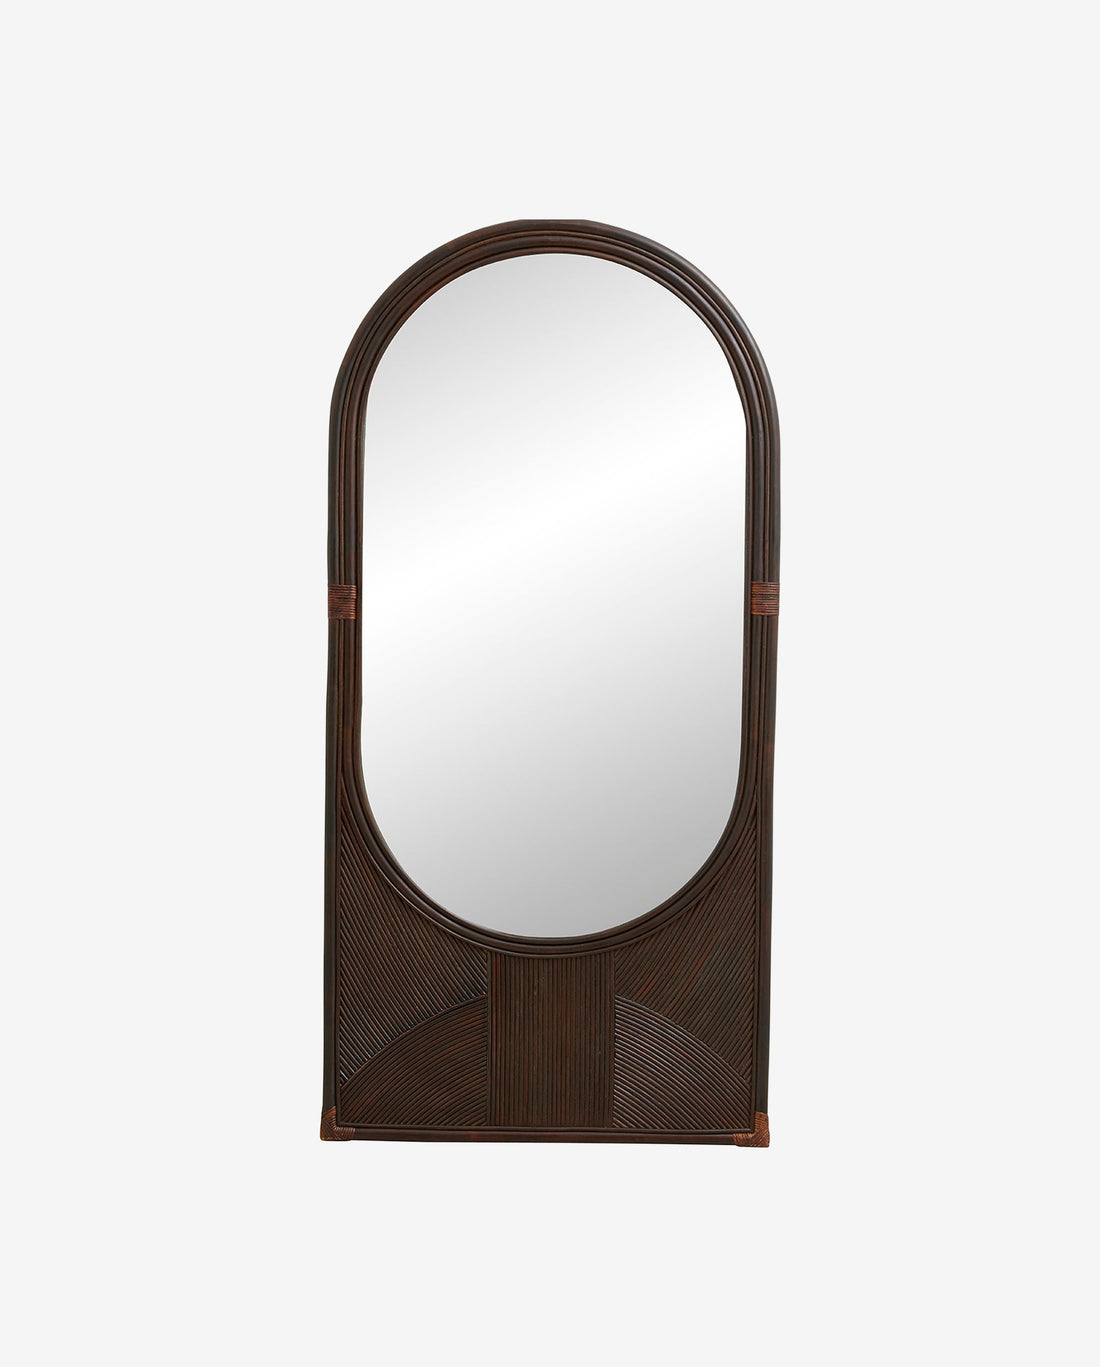 Nordal TURA mirror, L, brown